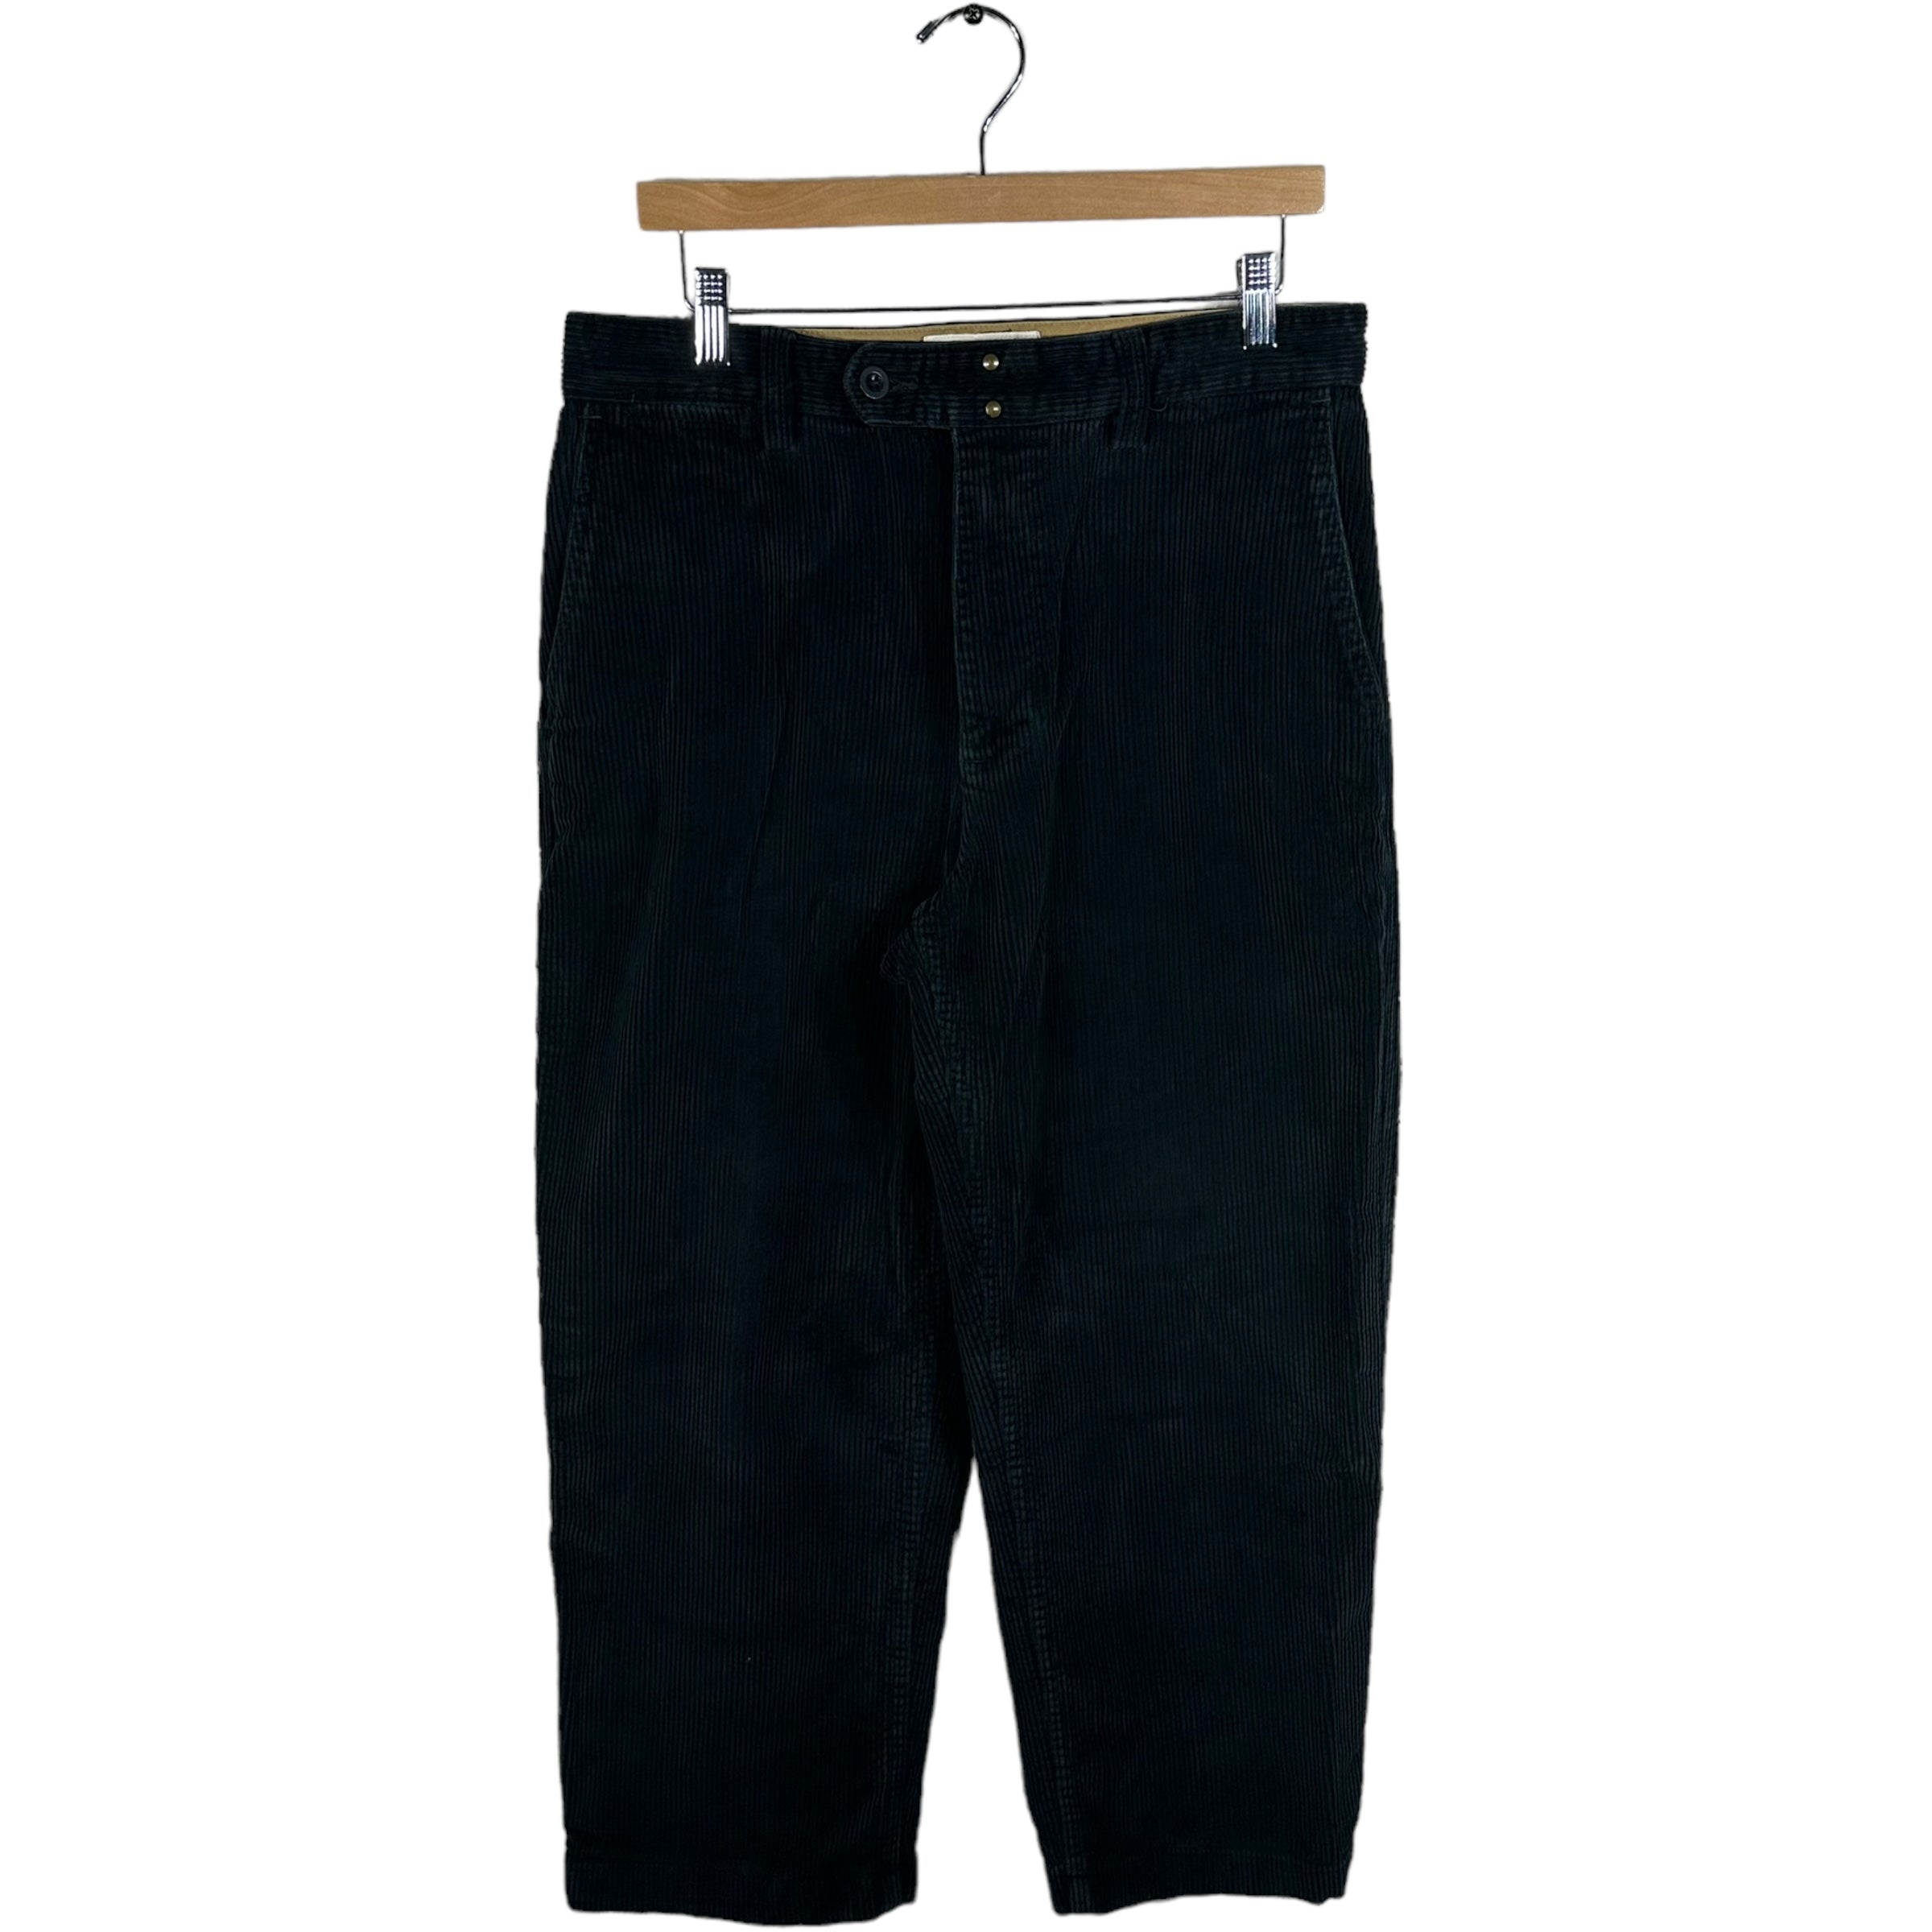 Vintage GAP Corduroy Pants